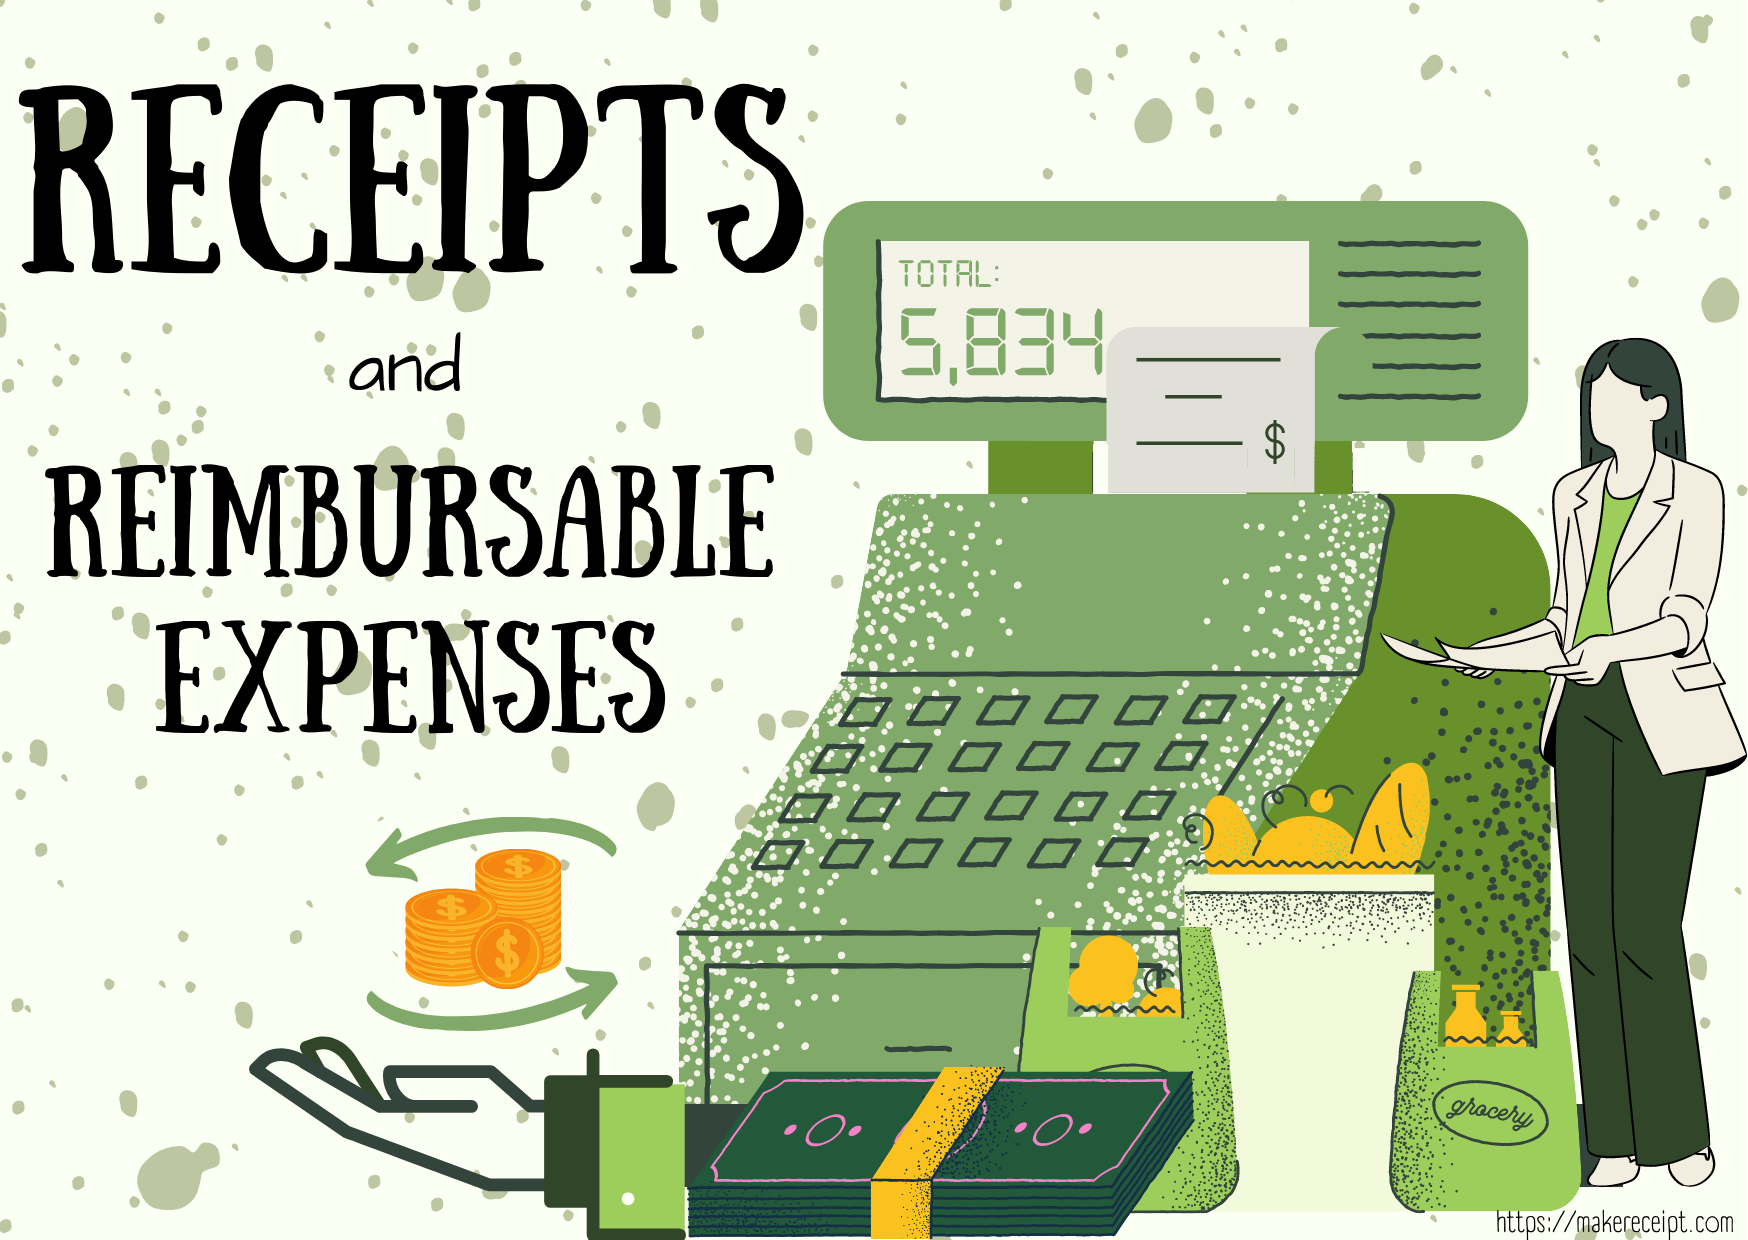 Receipts and Reimbursable Expenses